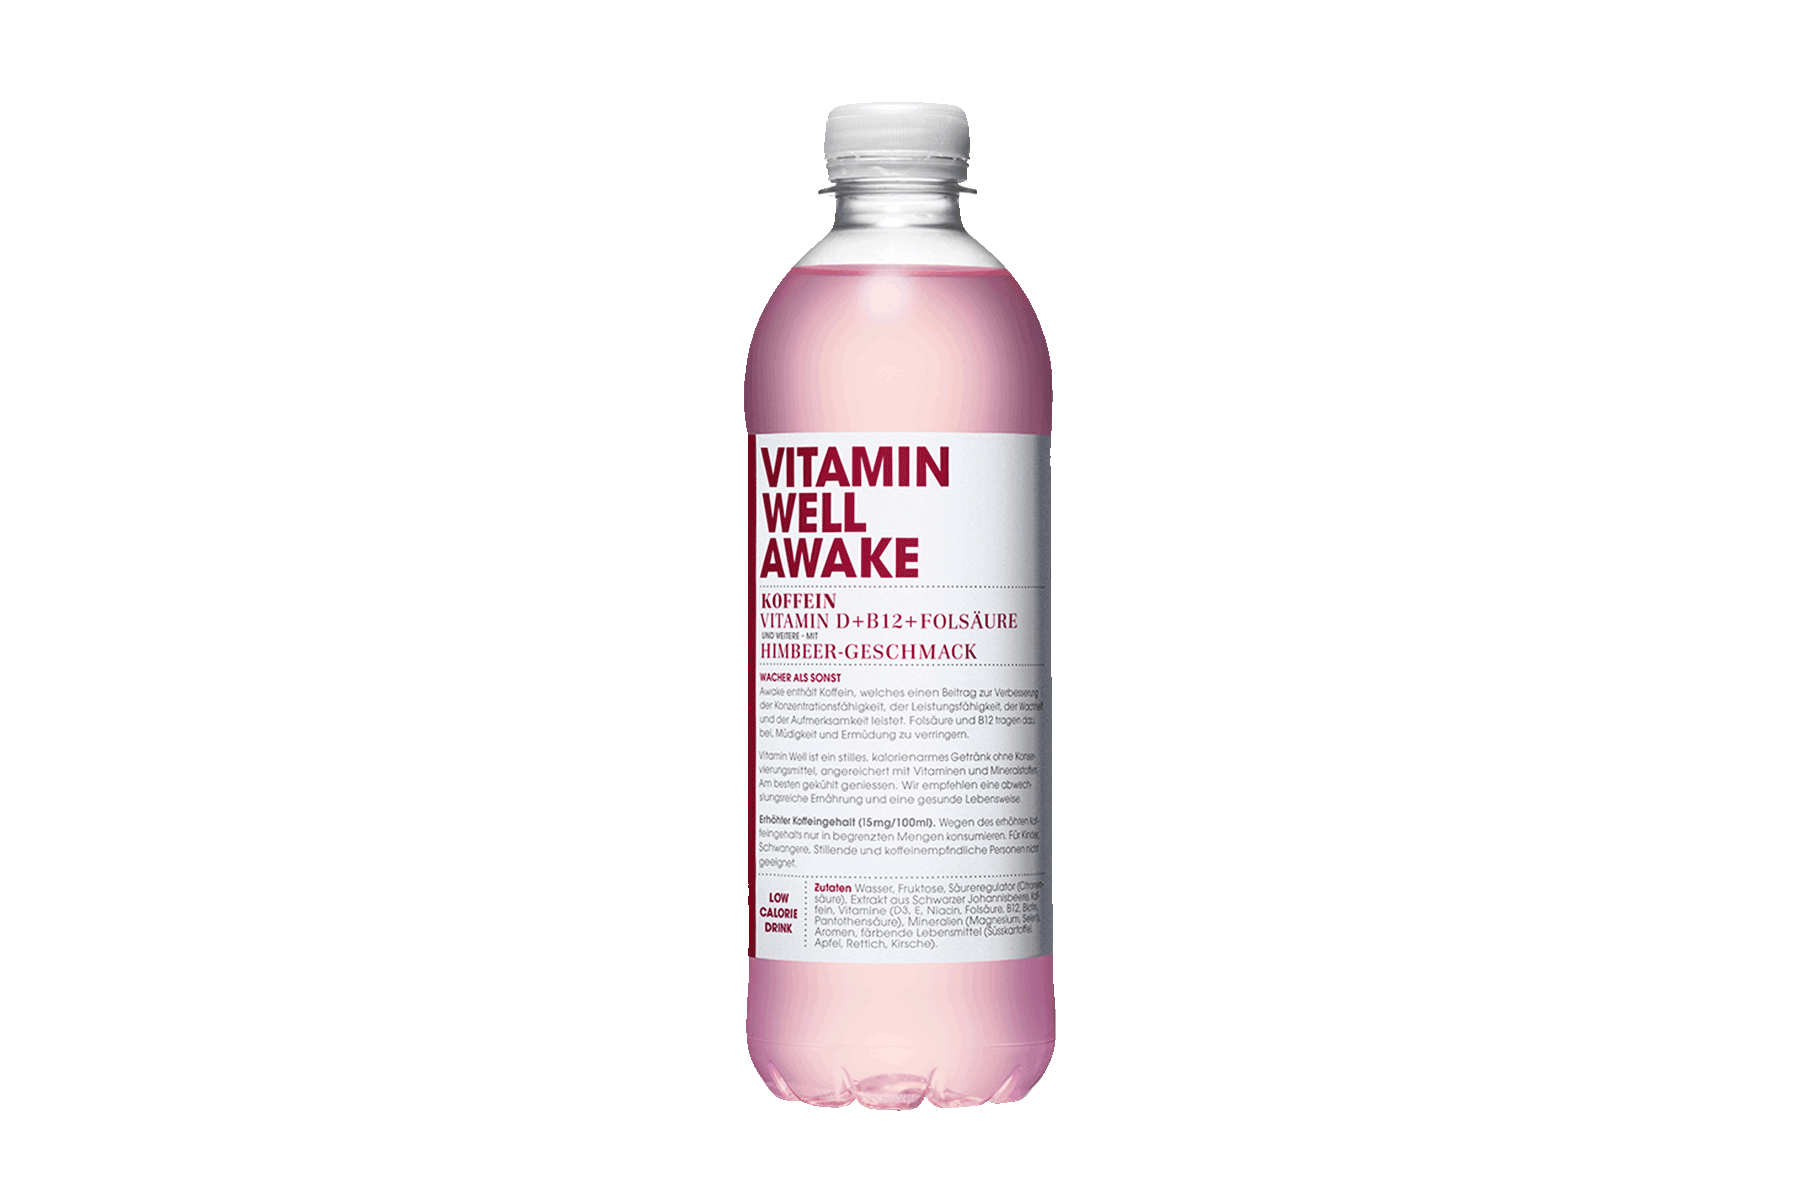 Vitamin Well Awake 5dl